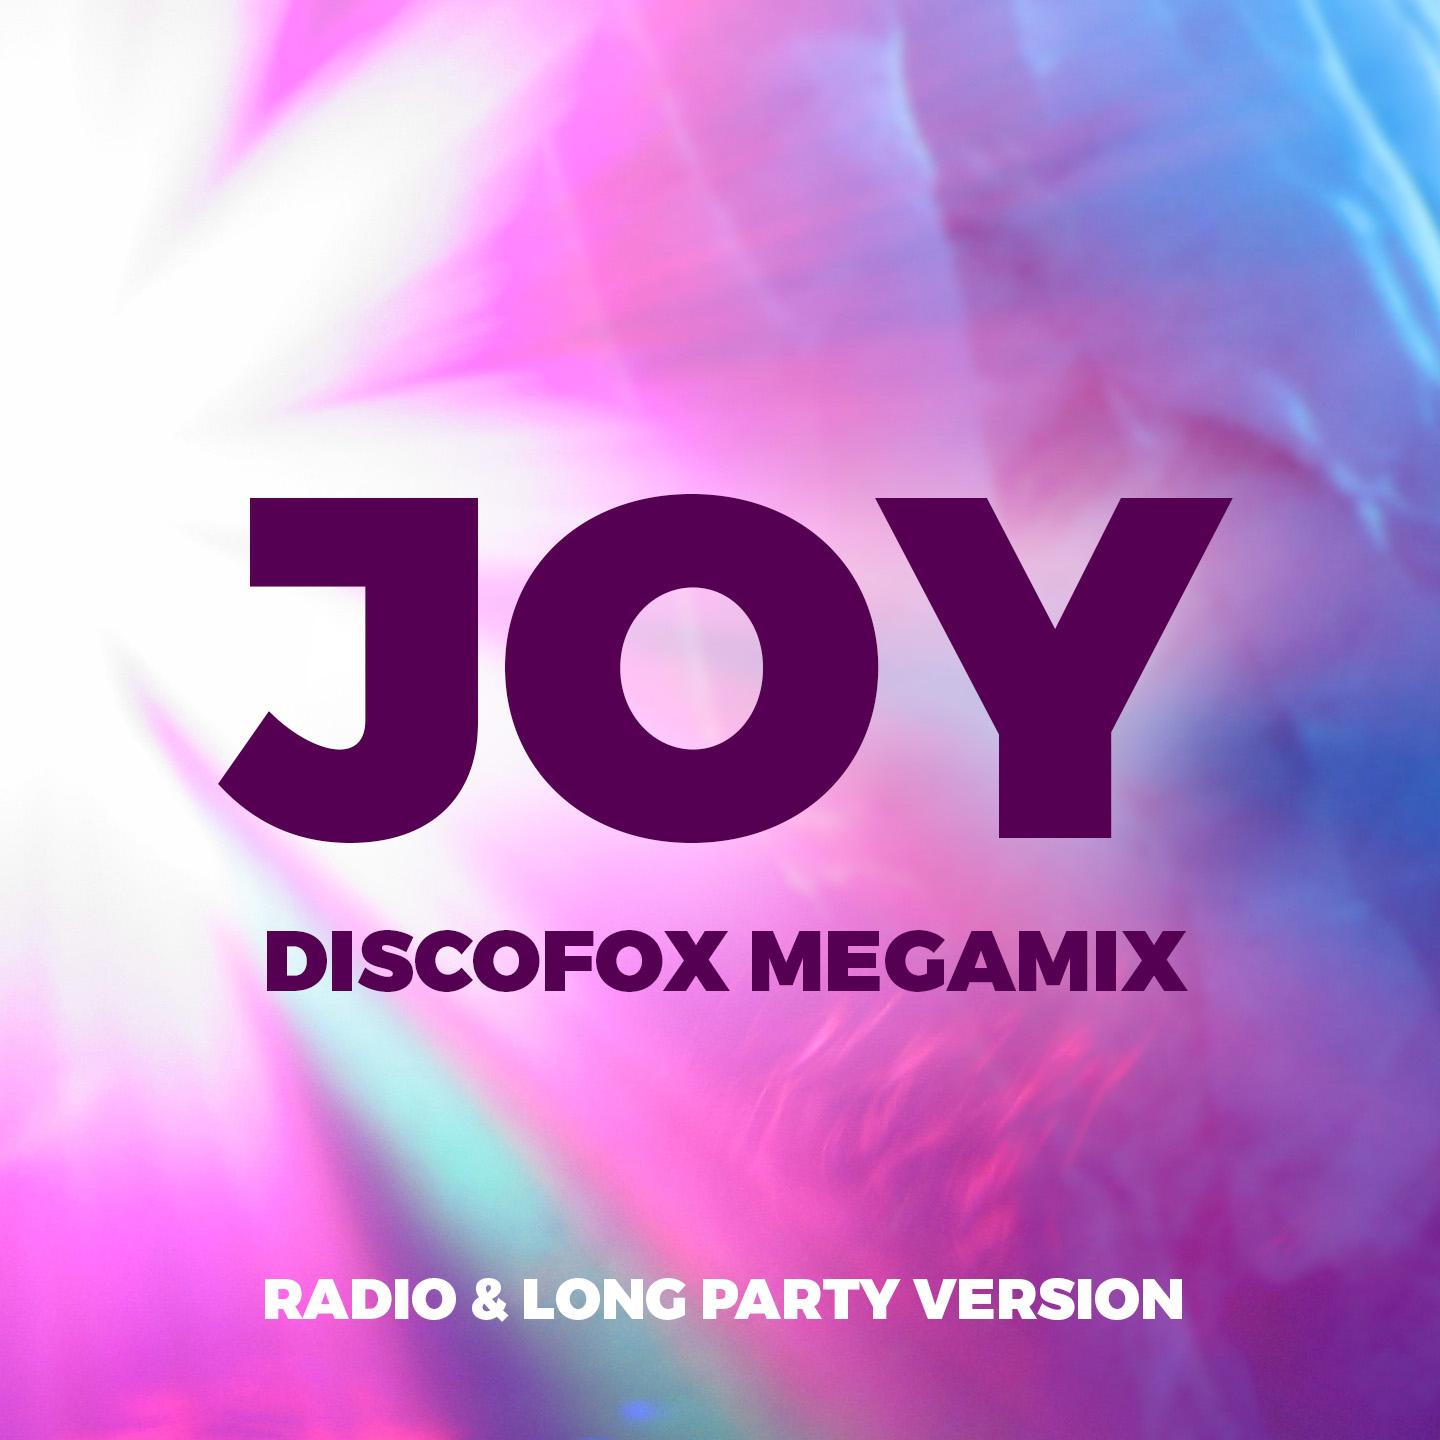 Джой мп 3. Joy Discofox Party Maxi Hit-Mix Joy. Радио мегамикс. Новое радио - Megamix. Discofox Megamix (short Radio Version) (short Radio Version) Joy.